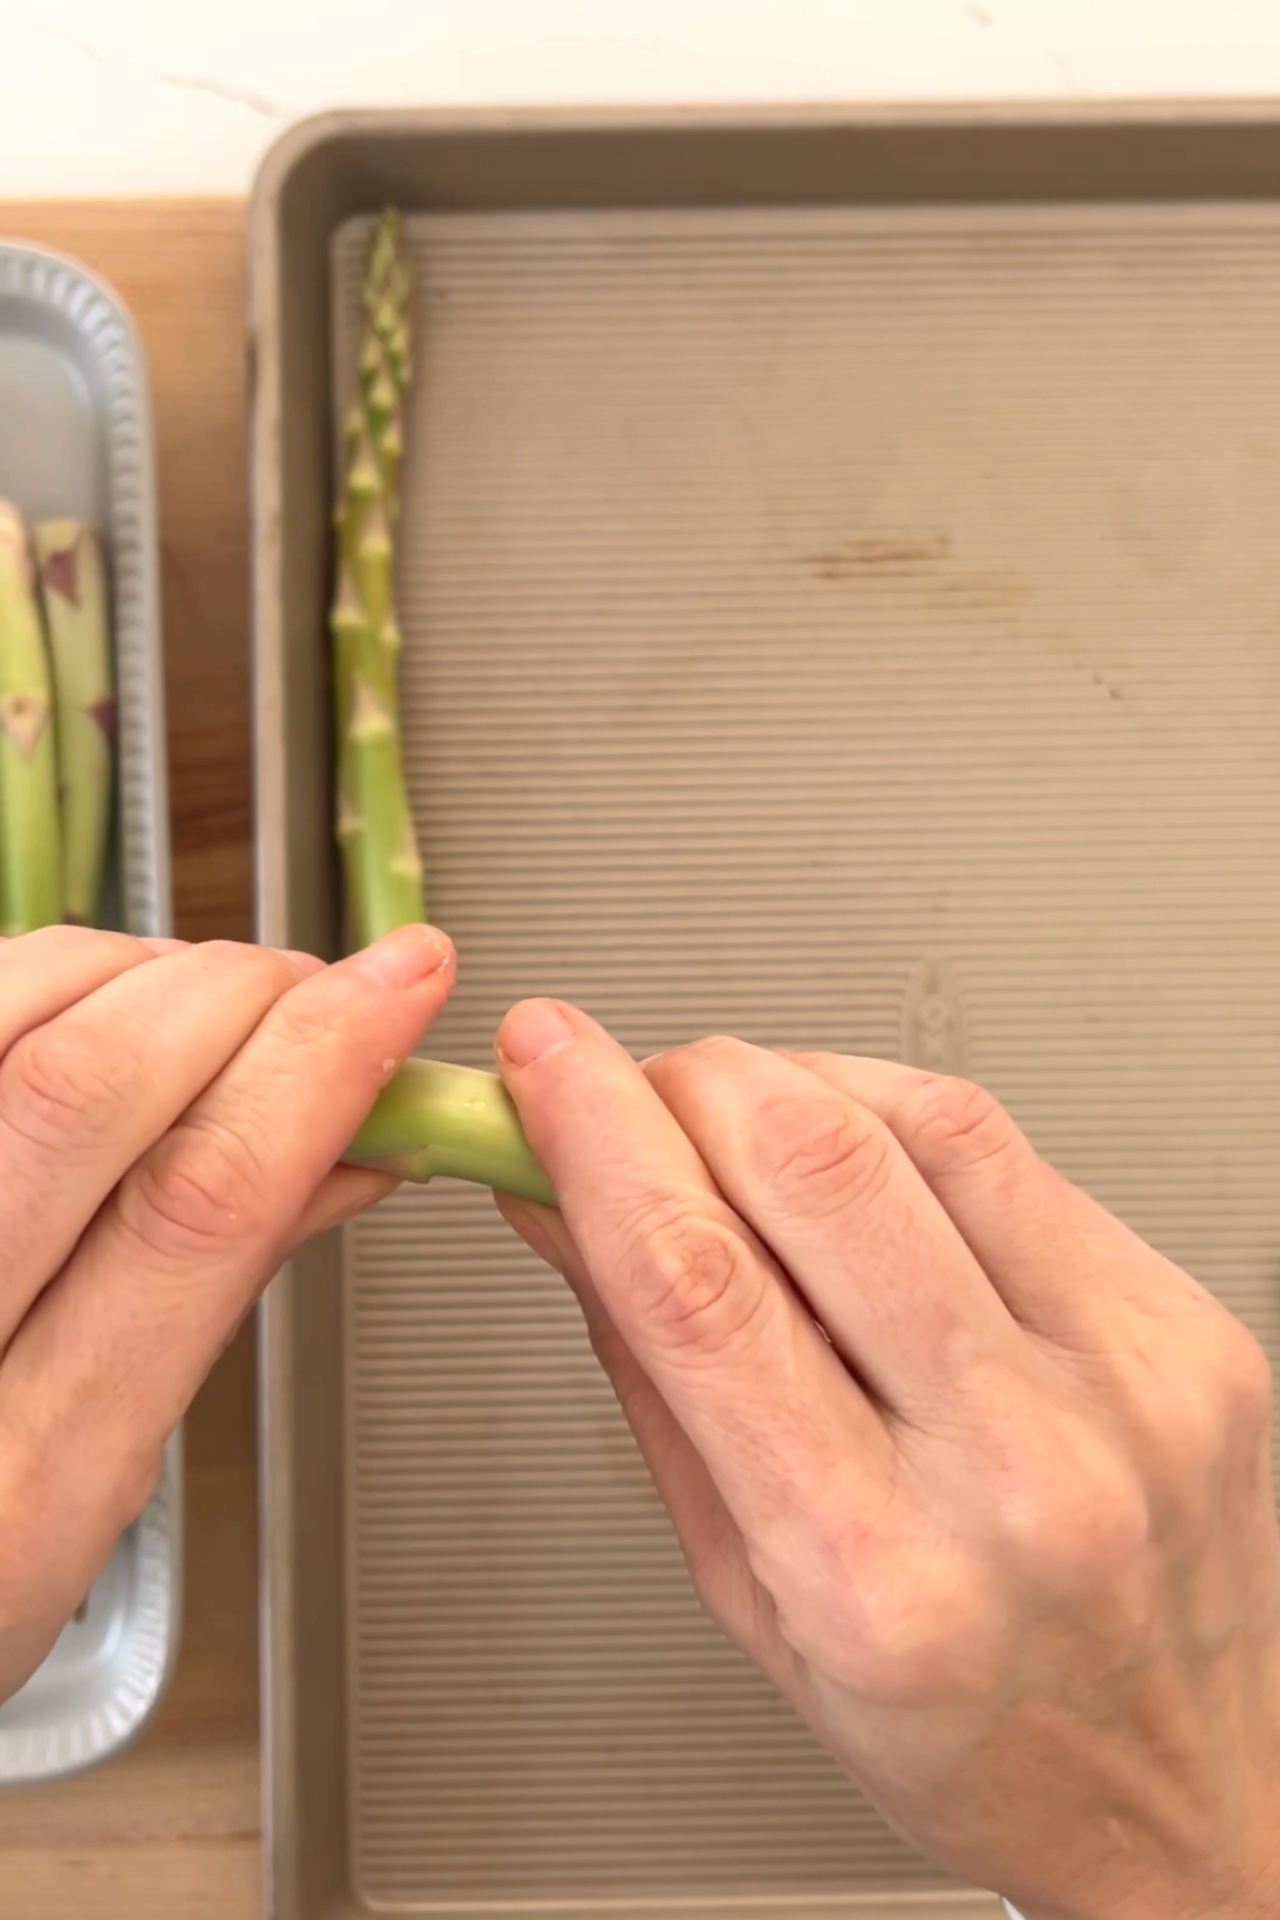 cotating the bottom of an asparagus spear